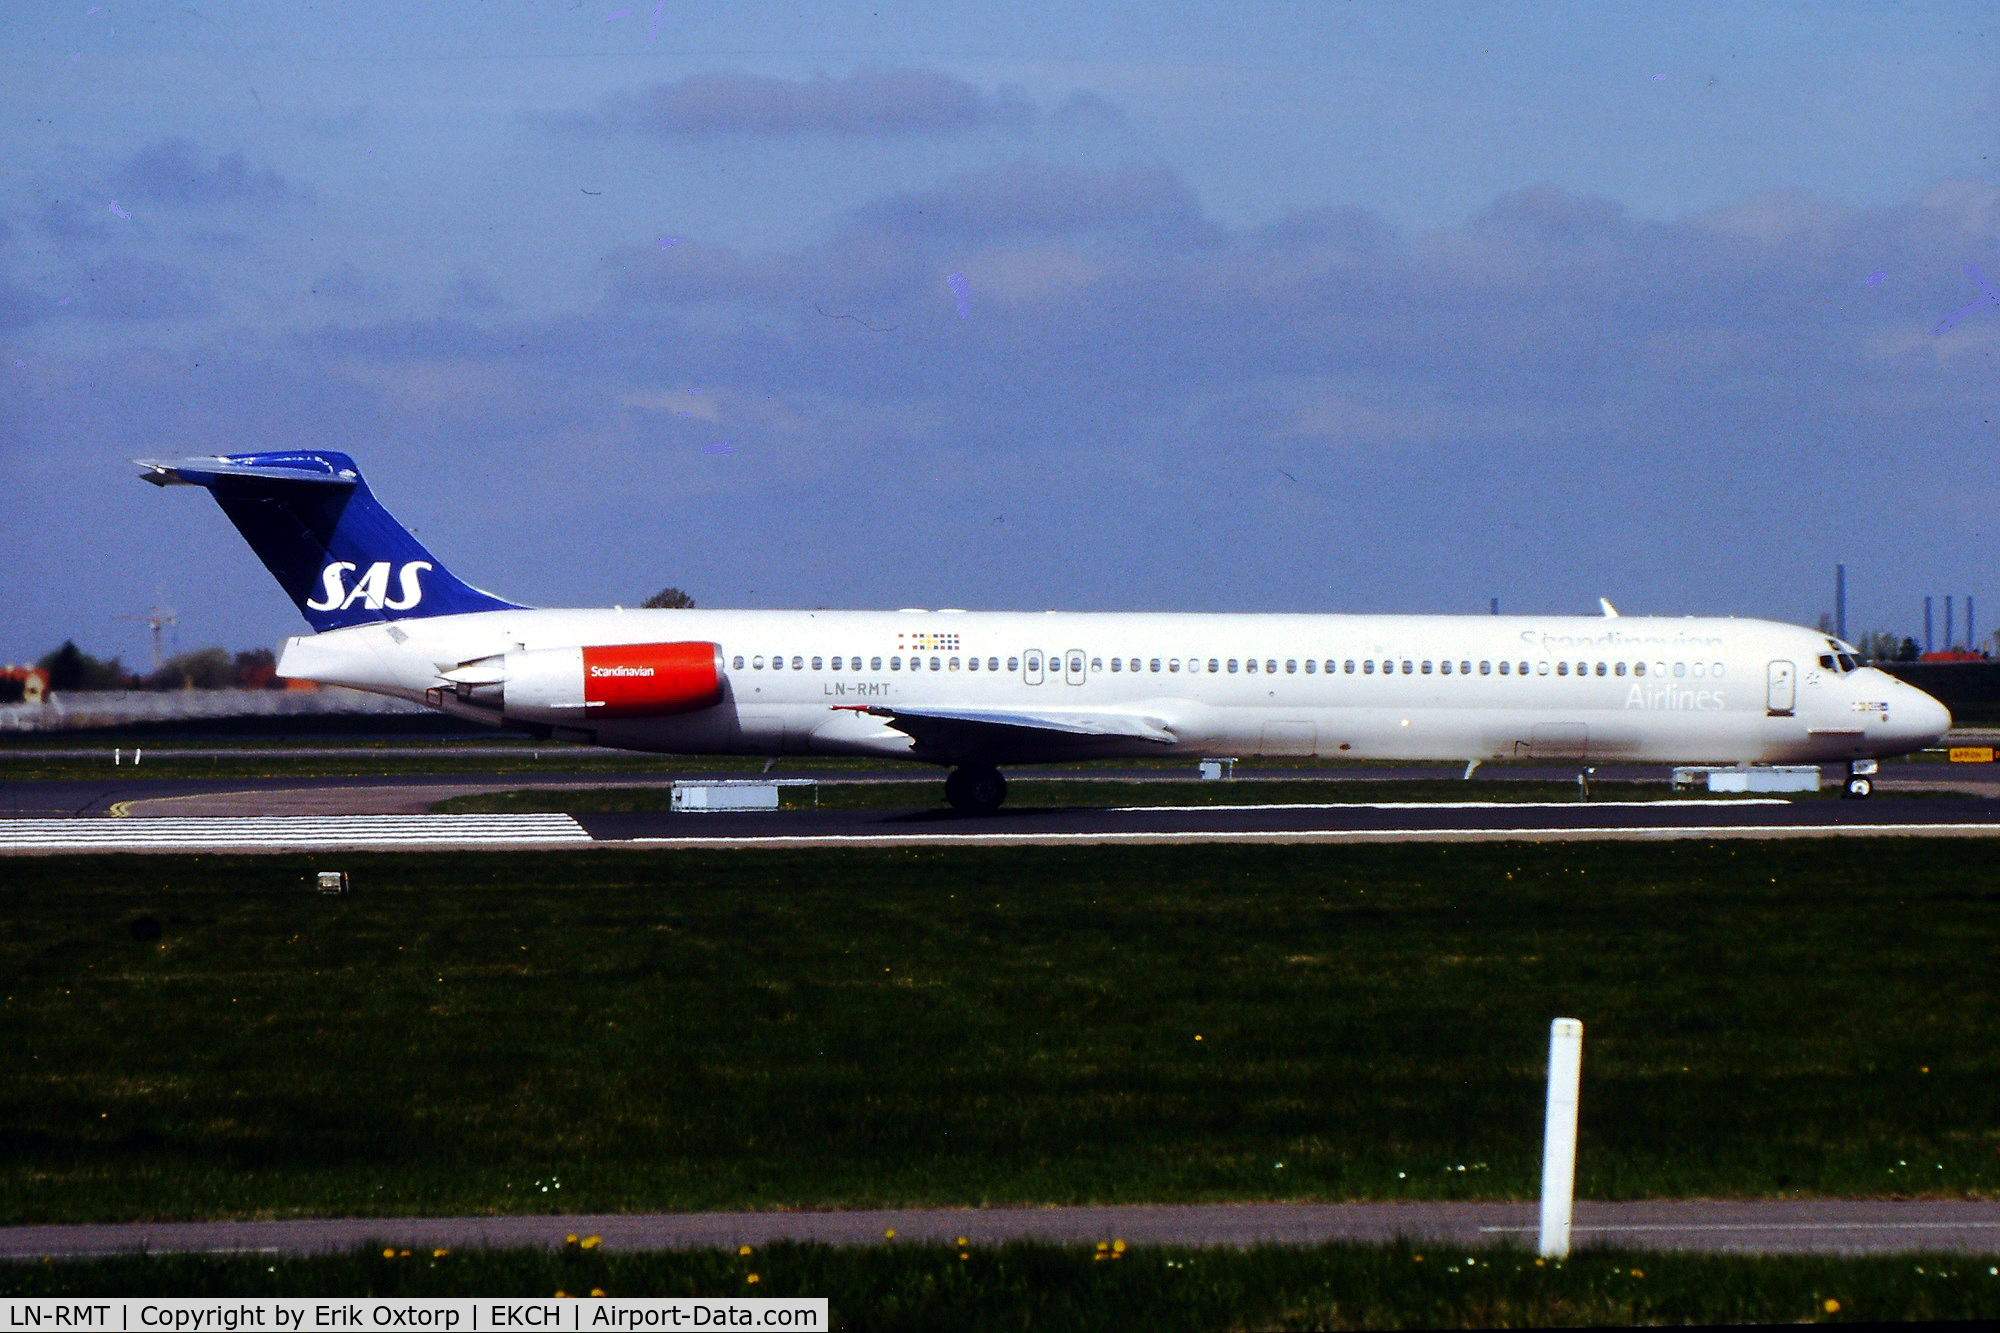 LN-RMT, 1991 McDonnell Douglas MD-82 (DC-9-82) C/N 53001, LN-RMT ready for takeoff rw 04R
Scanned slide